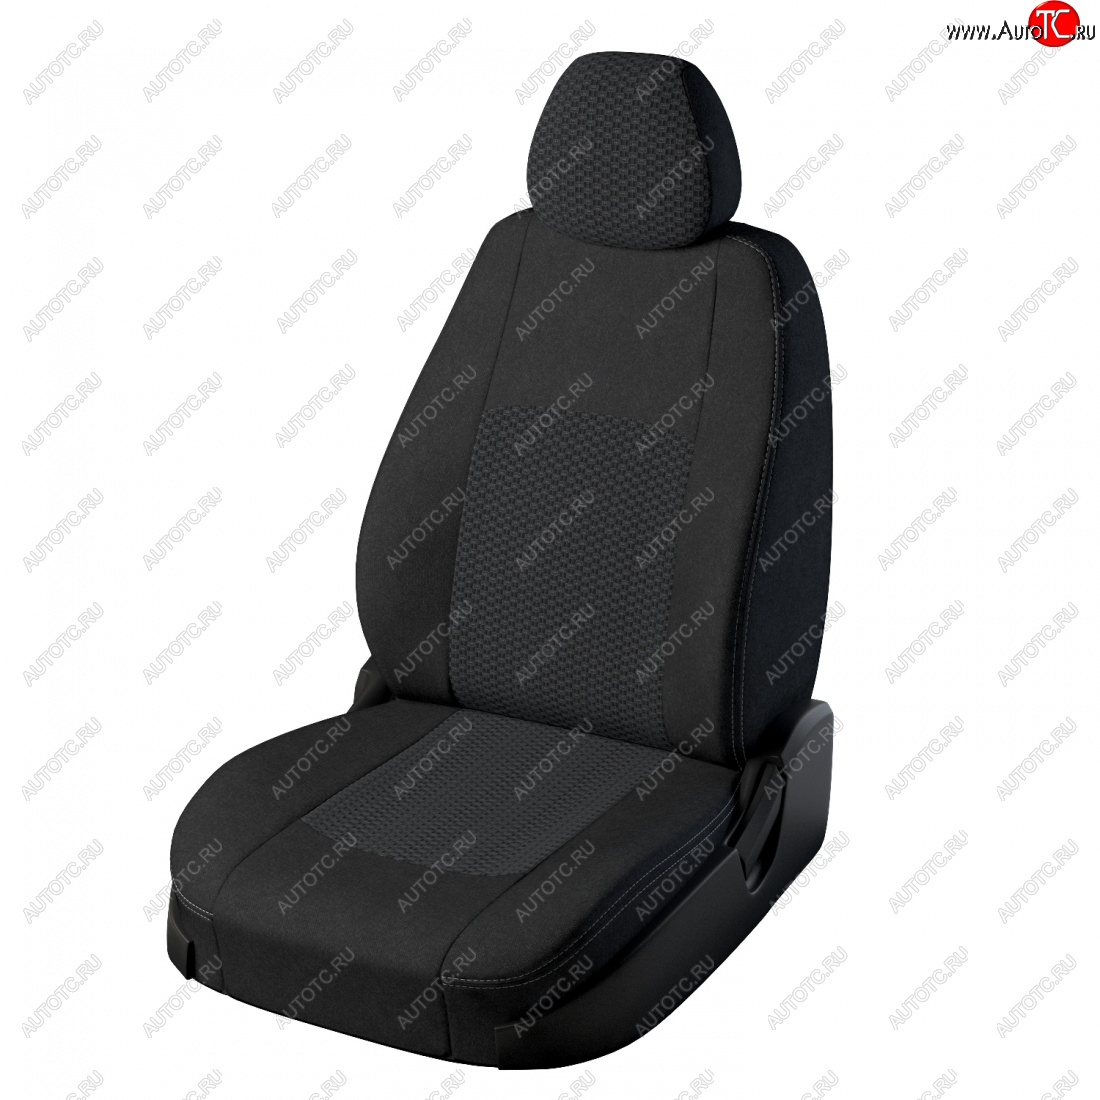 4 799 р. Чехлы для сидений Lord Autofashion Турин (жаккард)  Hyundai Sonata  EF (2001-2013) (Чёрный, вставка Вега)